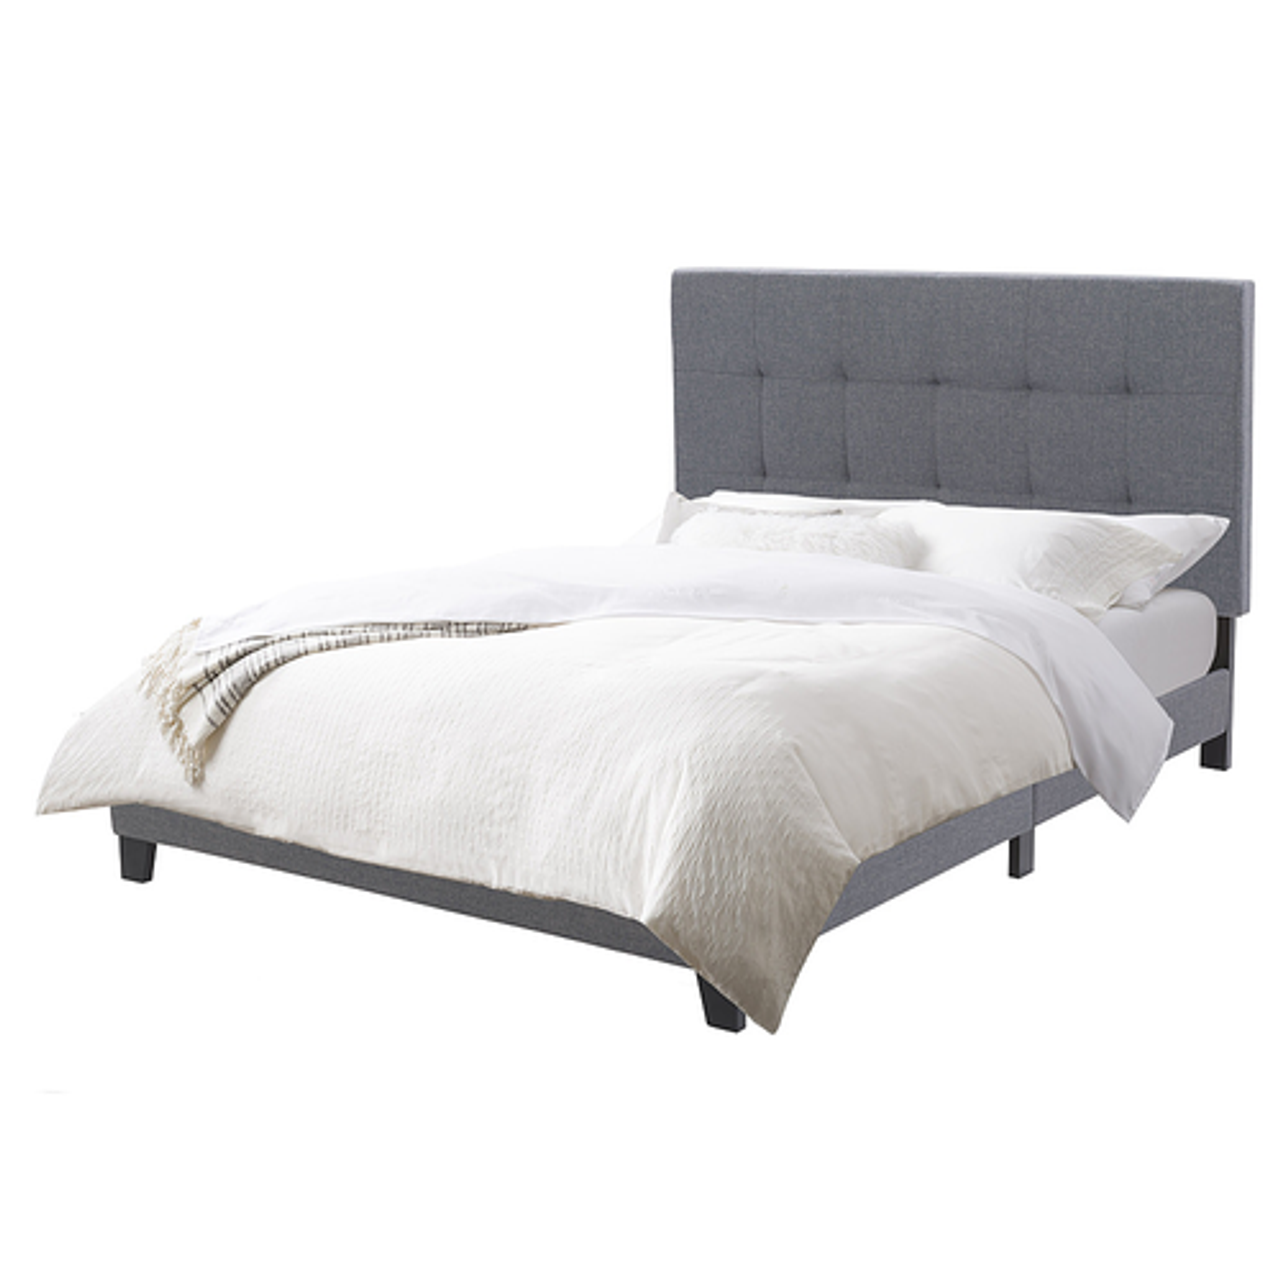 CorLiving Ellery Fabric Tufted Bed, Queen - Grey